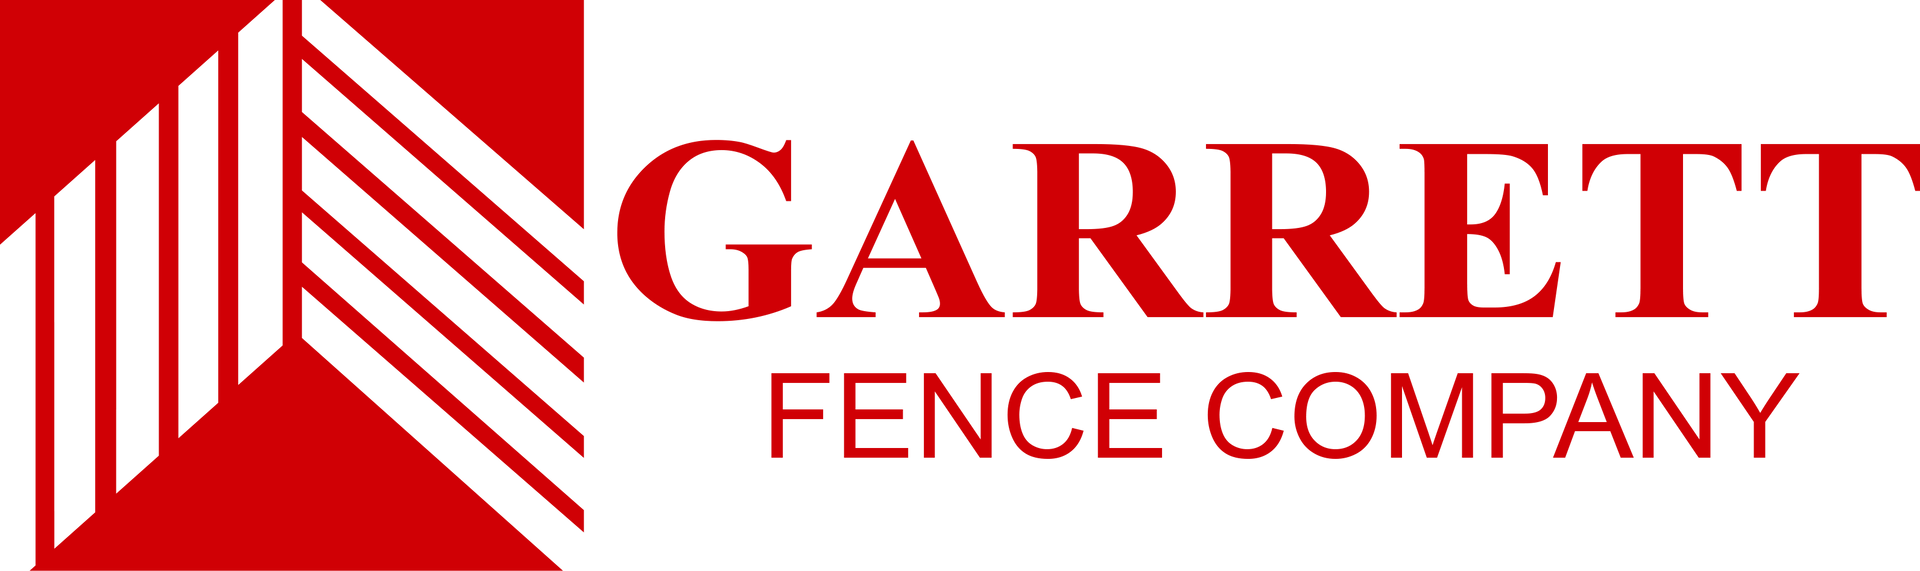 Garrett Fence Co. - Logo